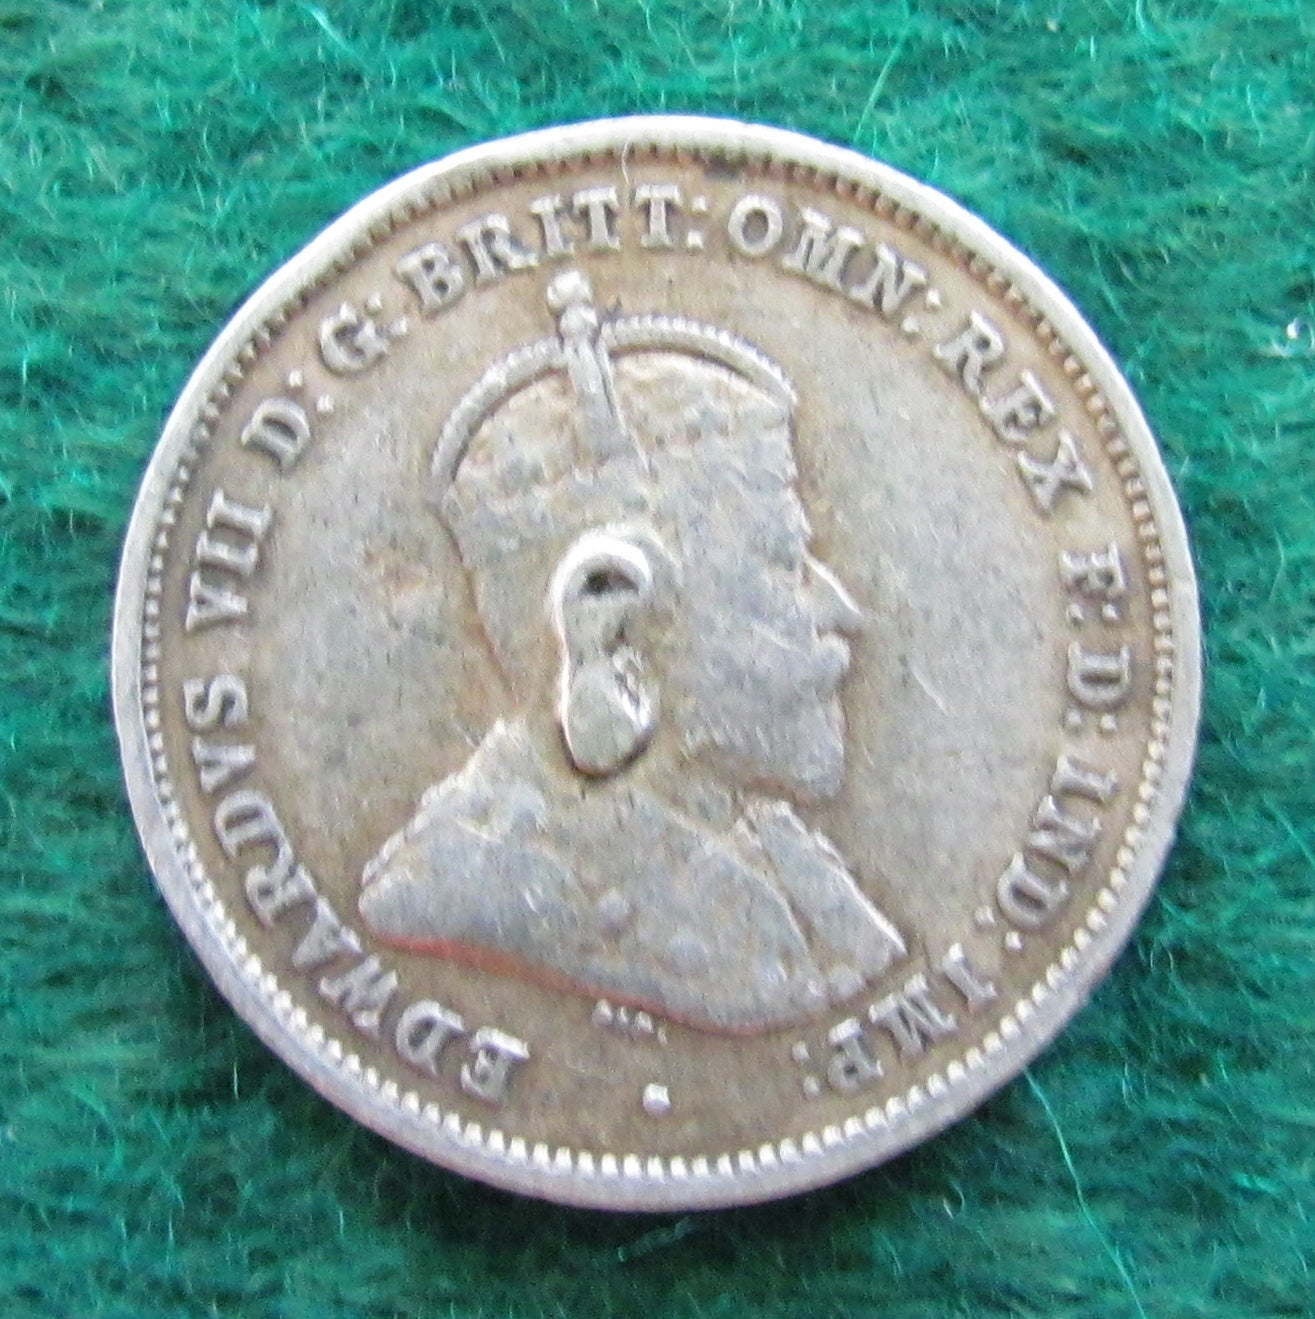 Australian 1910 6d Sixpence King Edward VII Coin Variety - Circulated